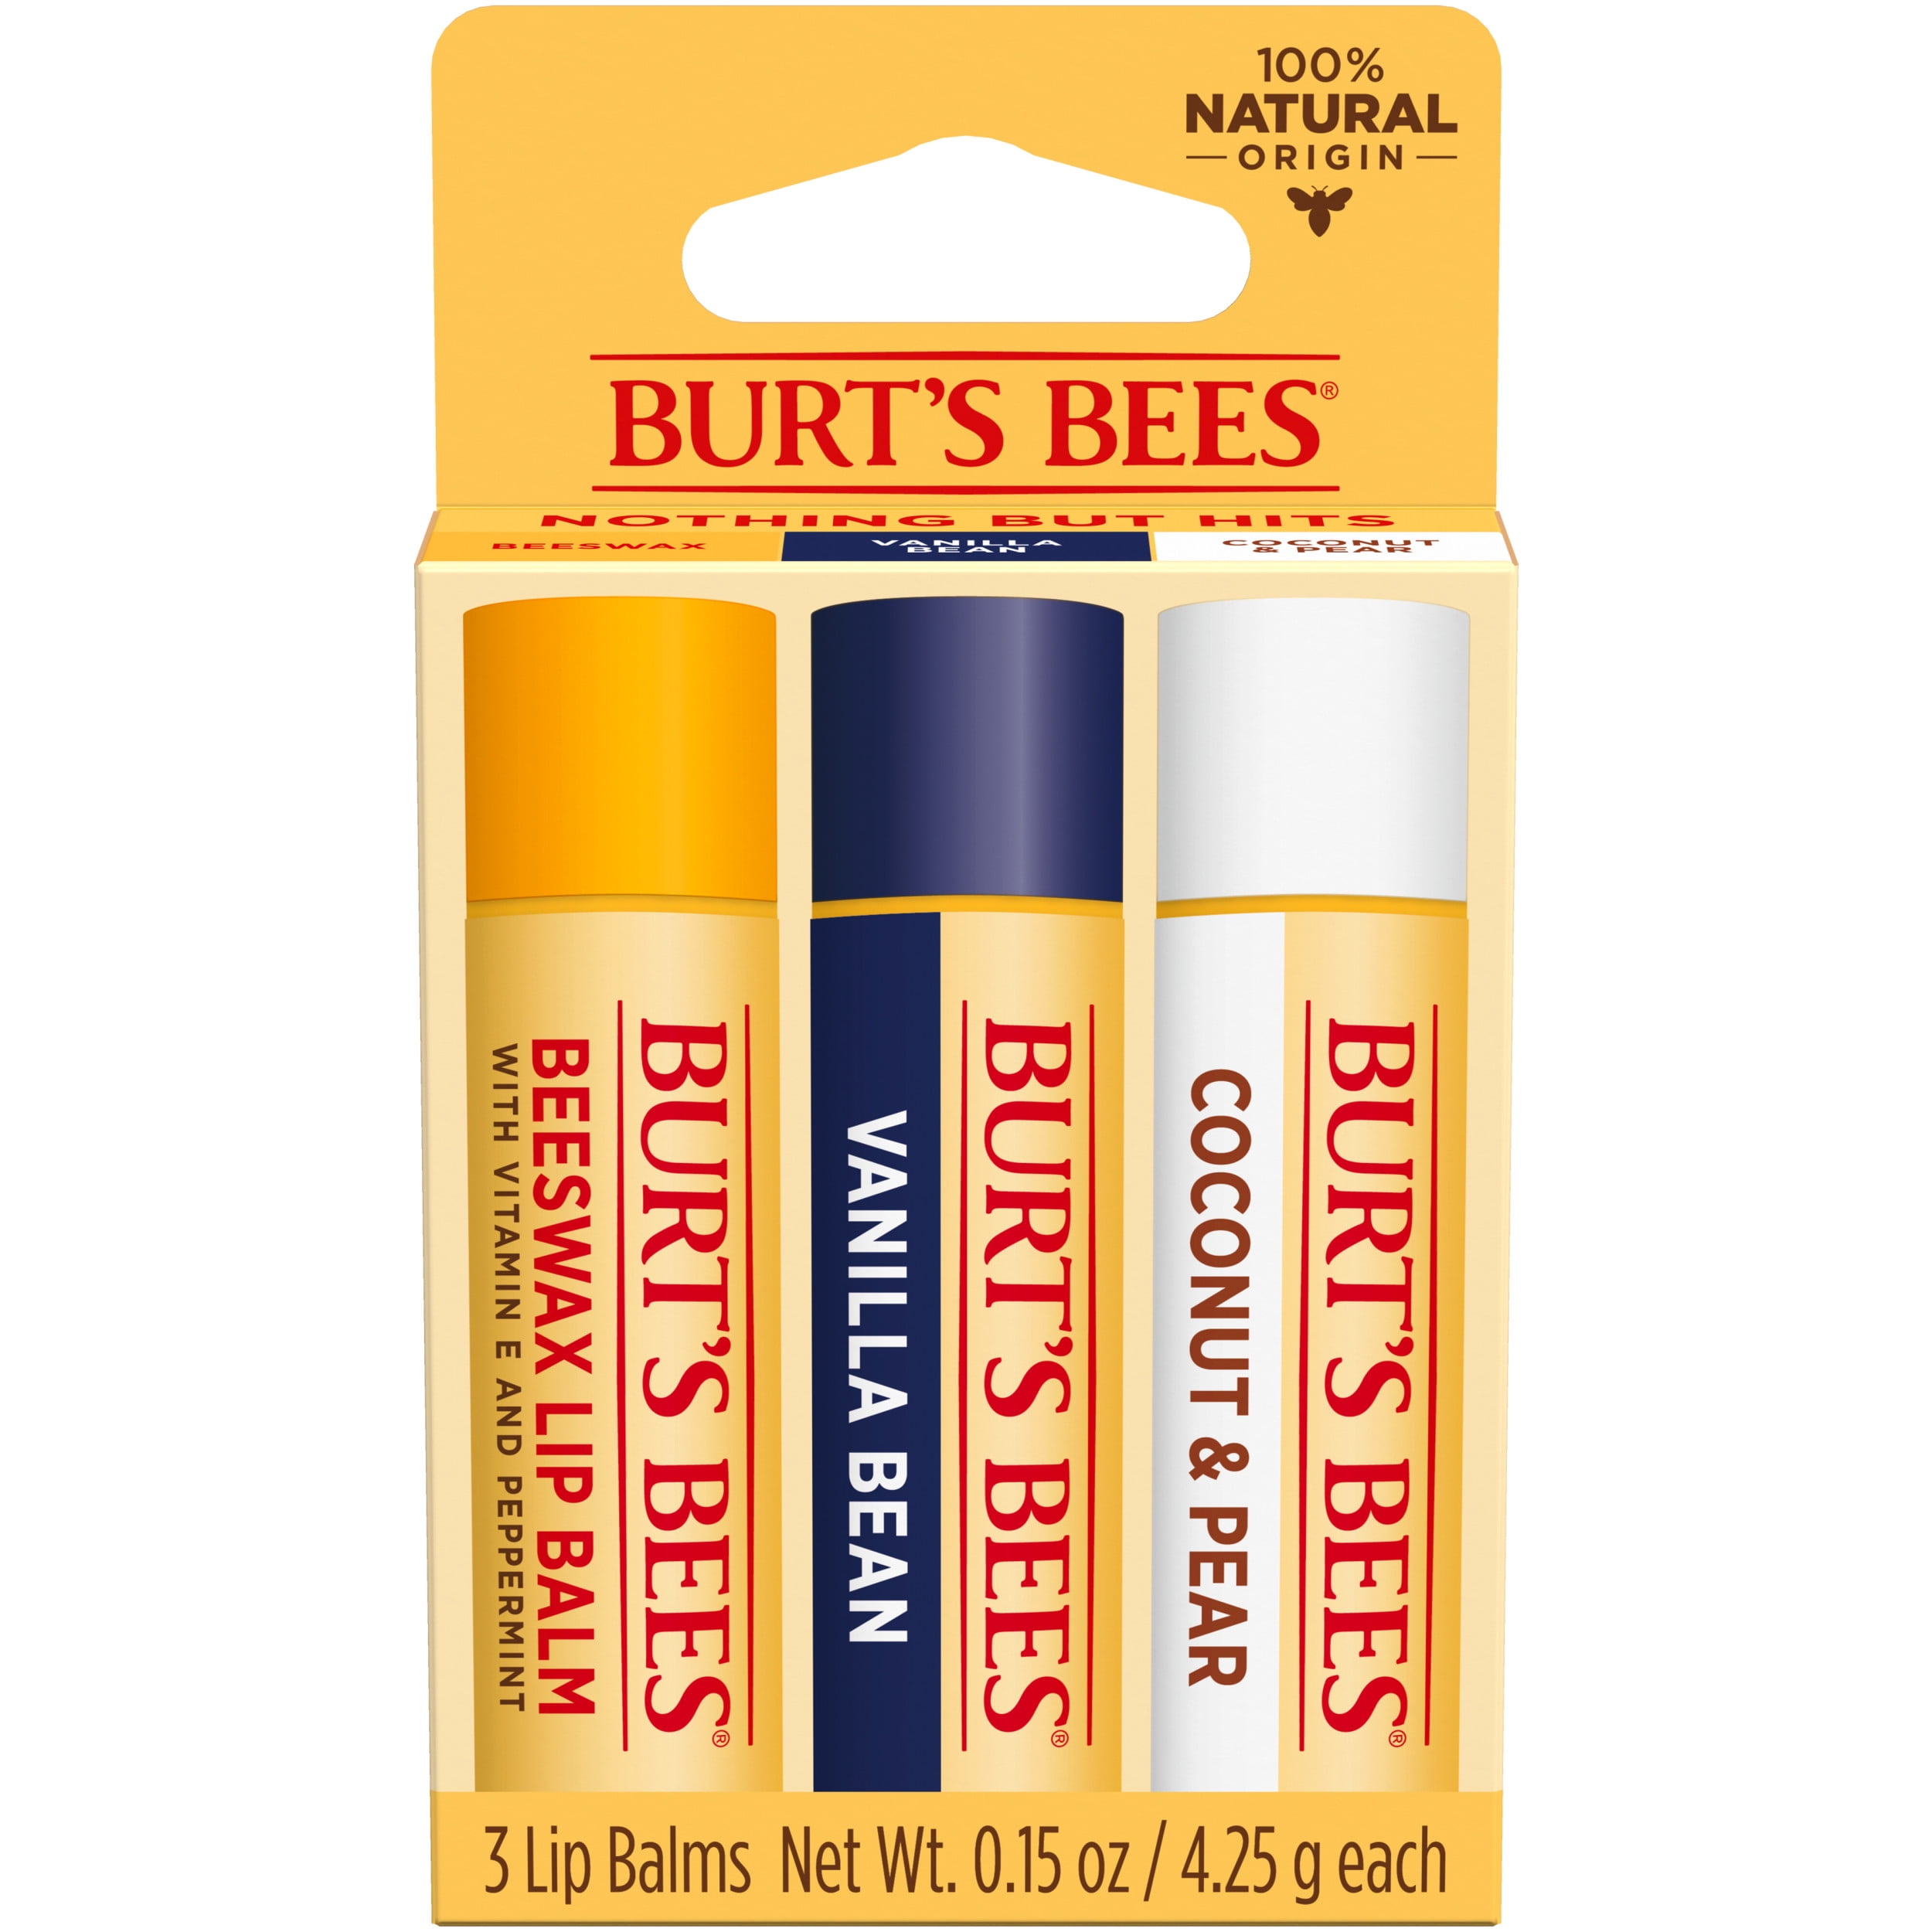 Burt's Bees 100% Natural Moisturizing Lip Balm - Freshly Picked Beeswax -  Shop Lip Balm & Treatments at H-E-B